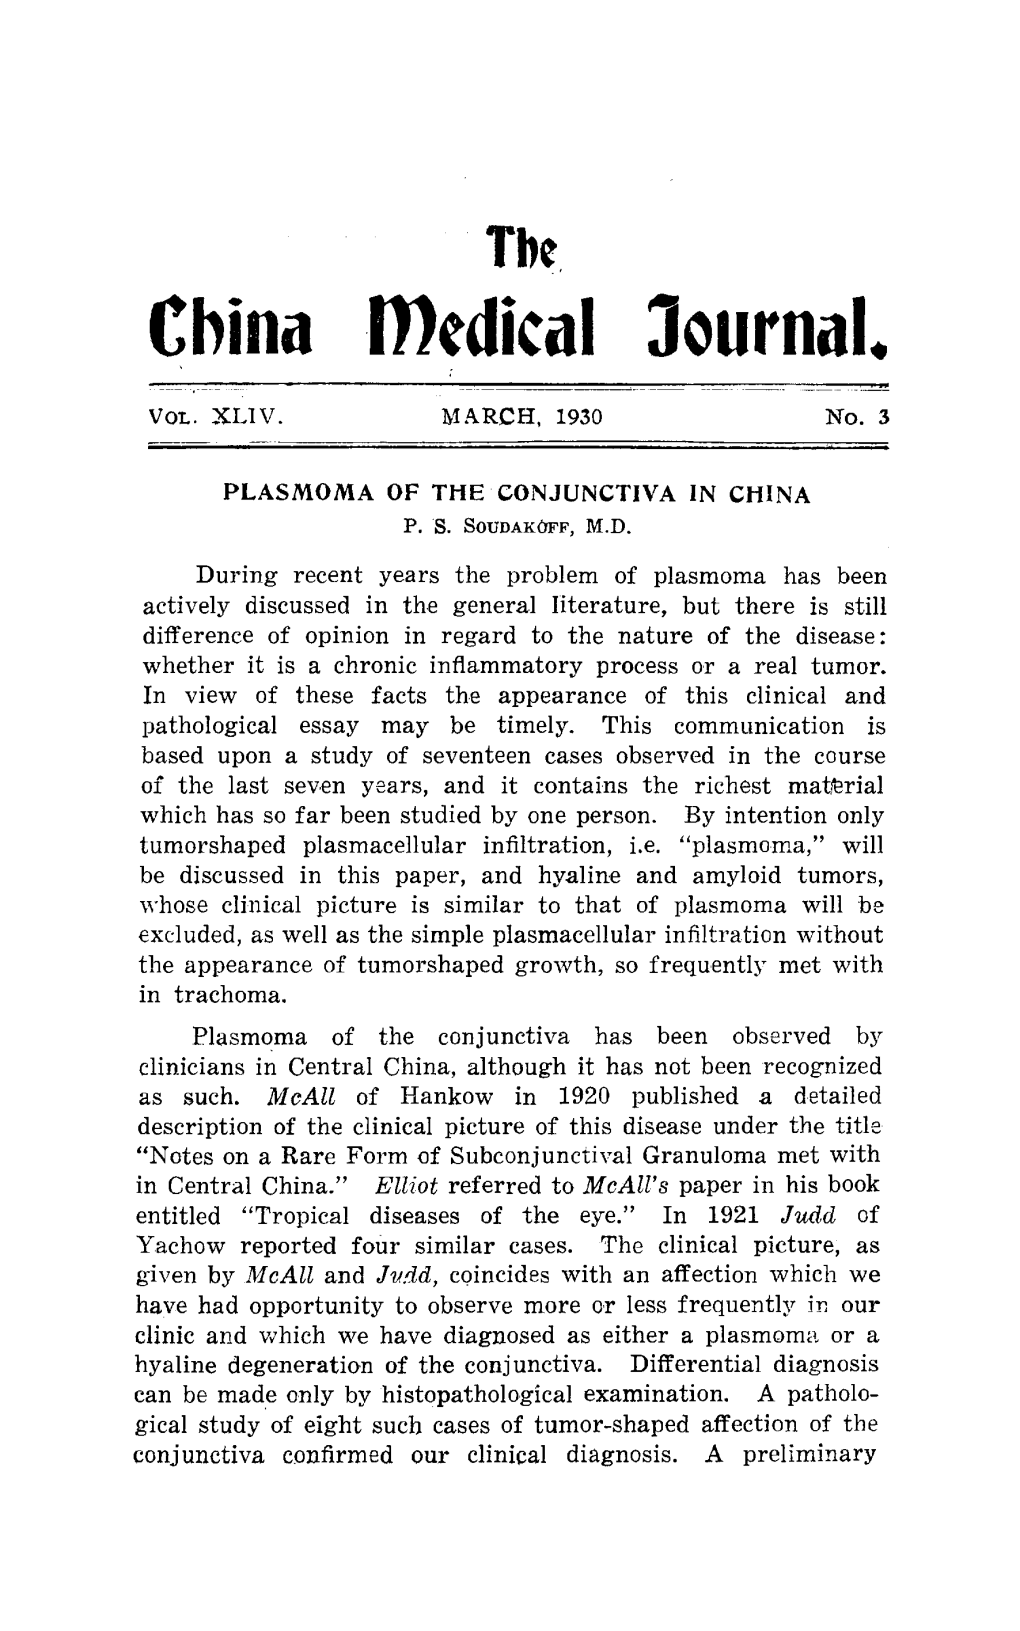 China Iftedical Journal